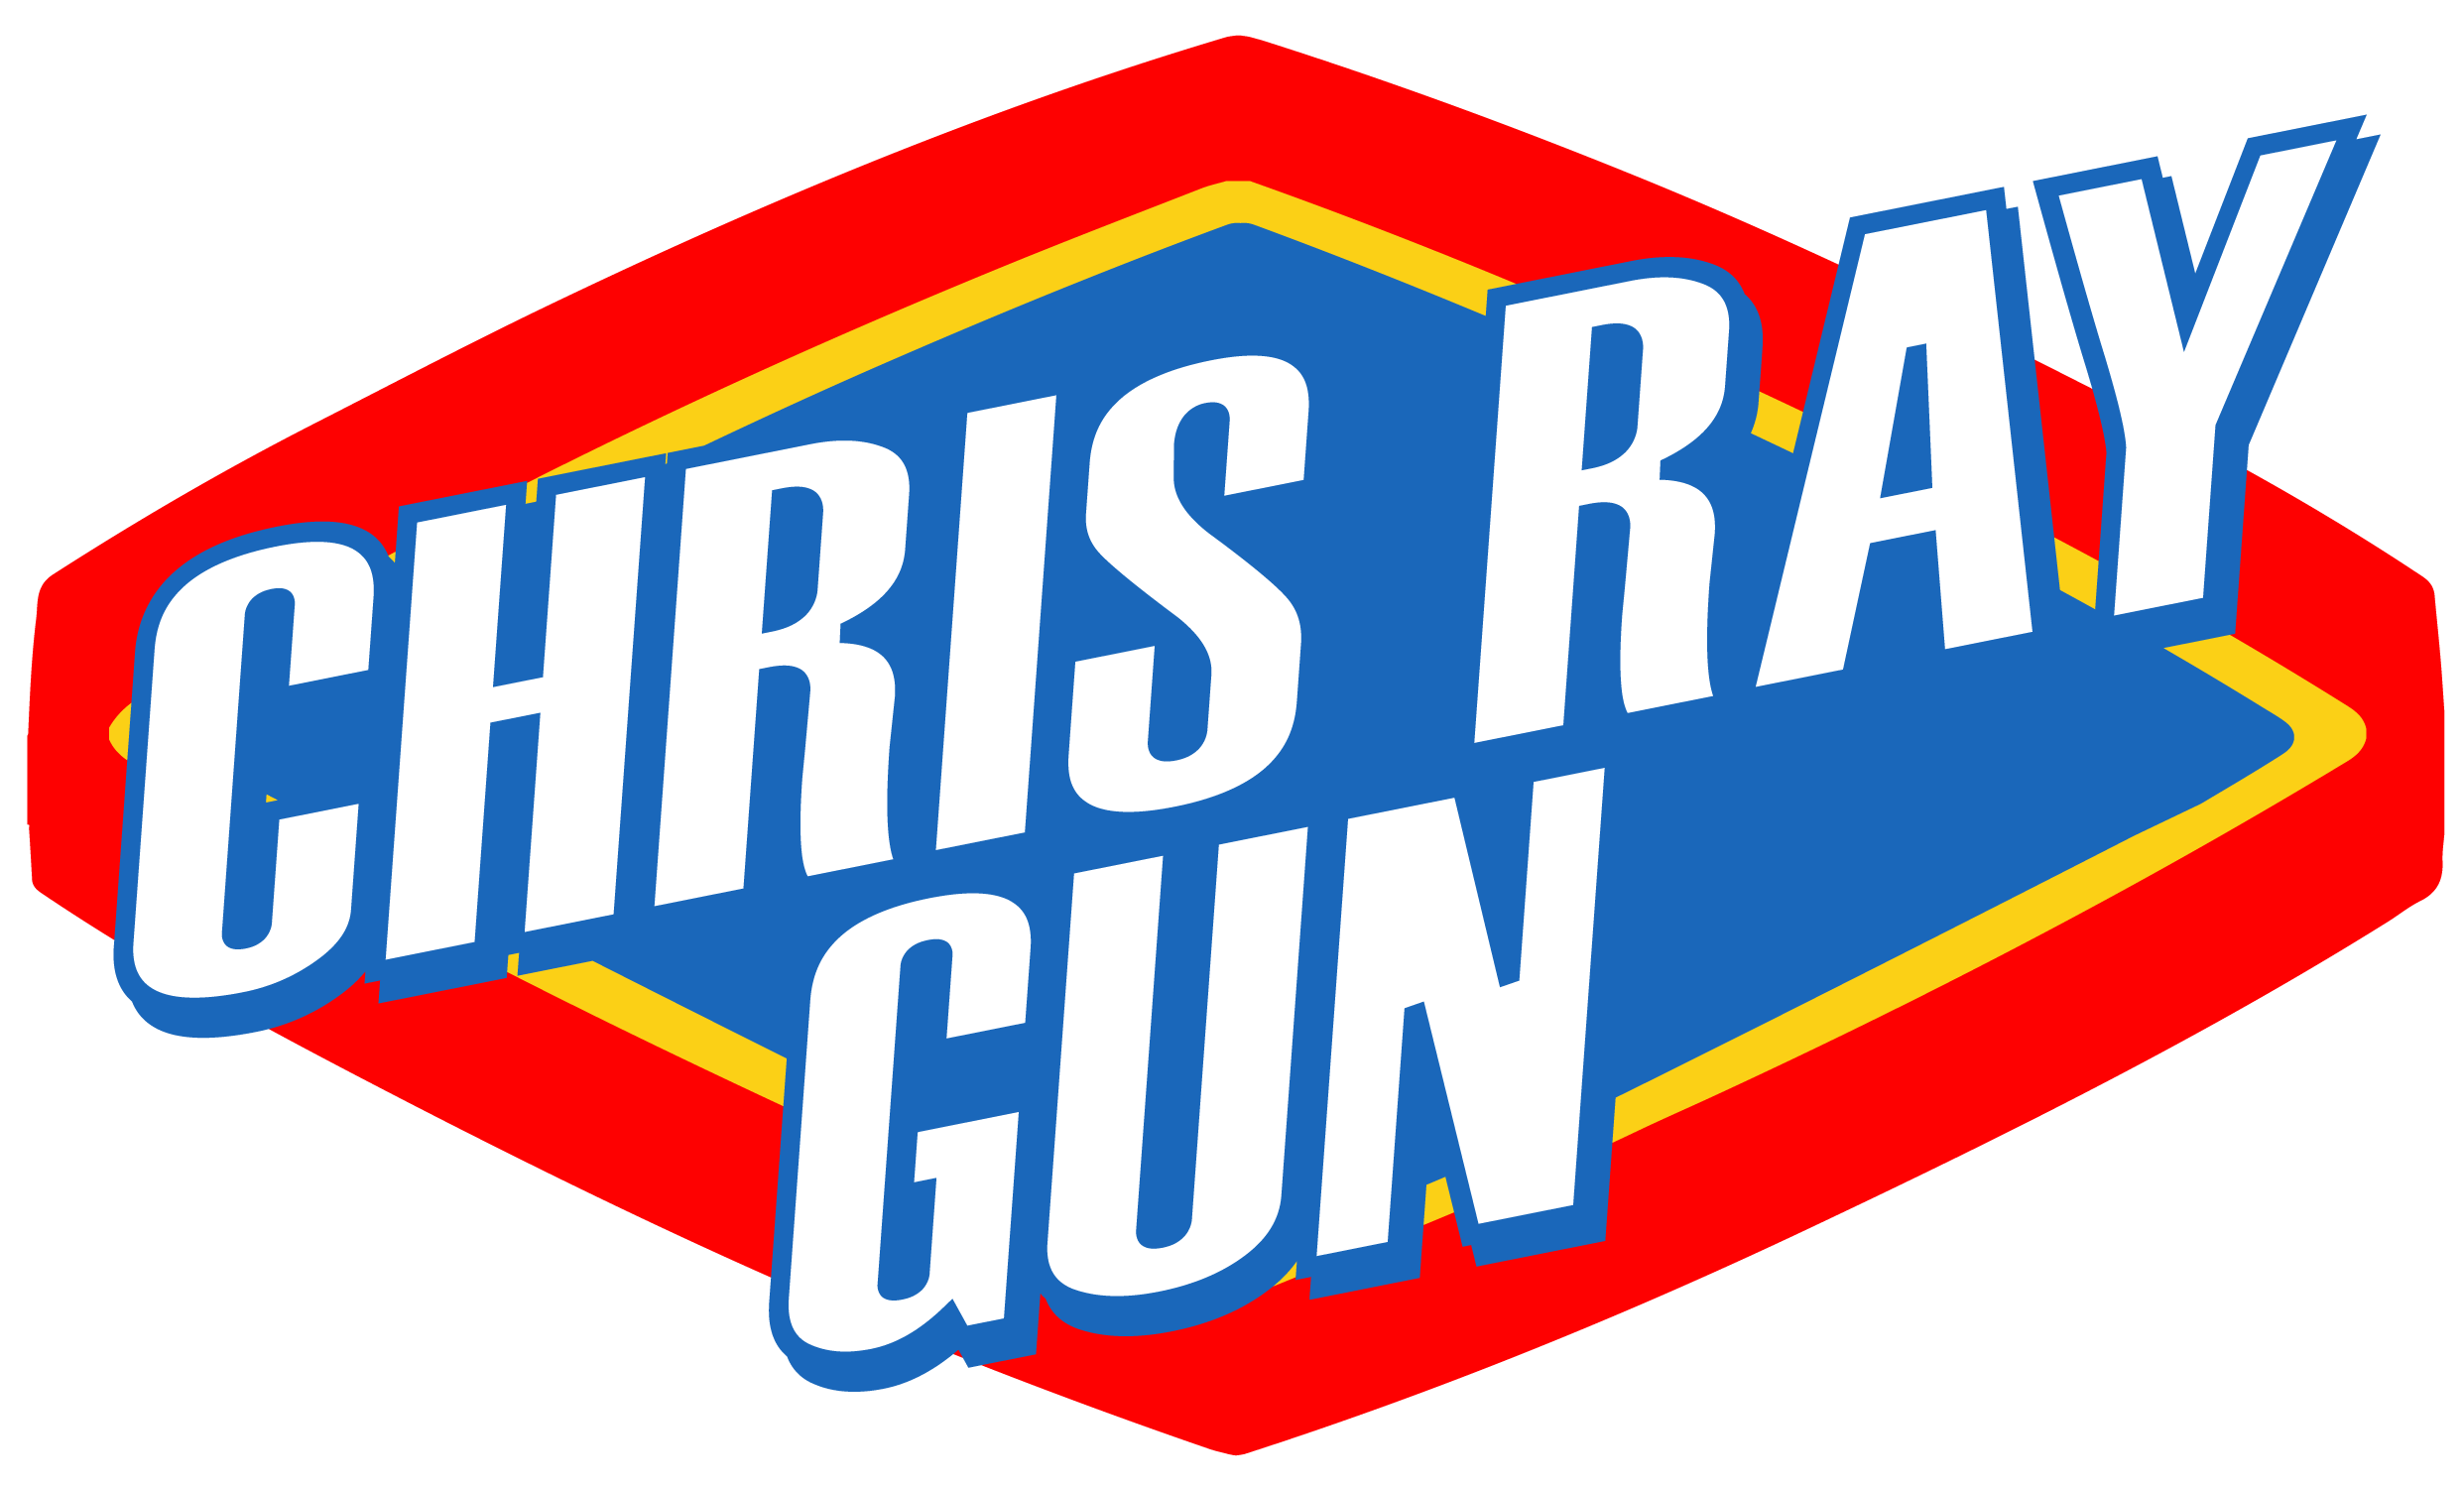 Clorox Logo - Christ Ray Gun Clorox Logo : ChrisRayGun